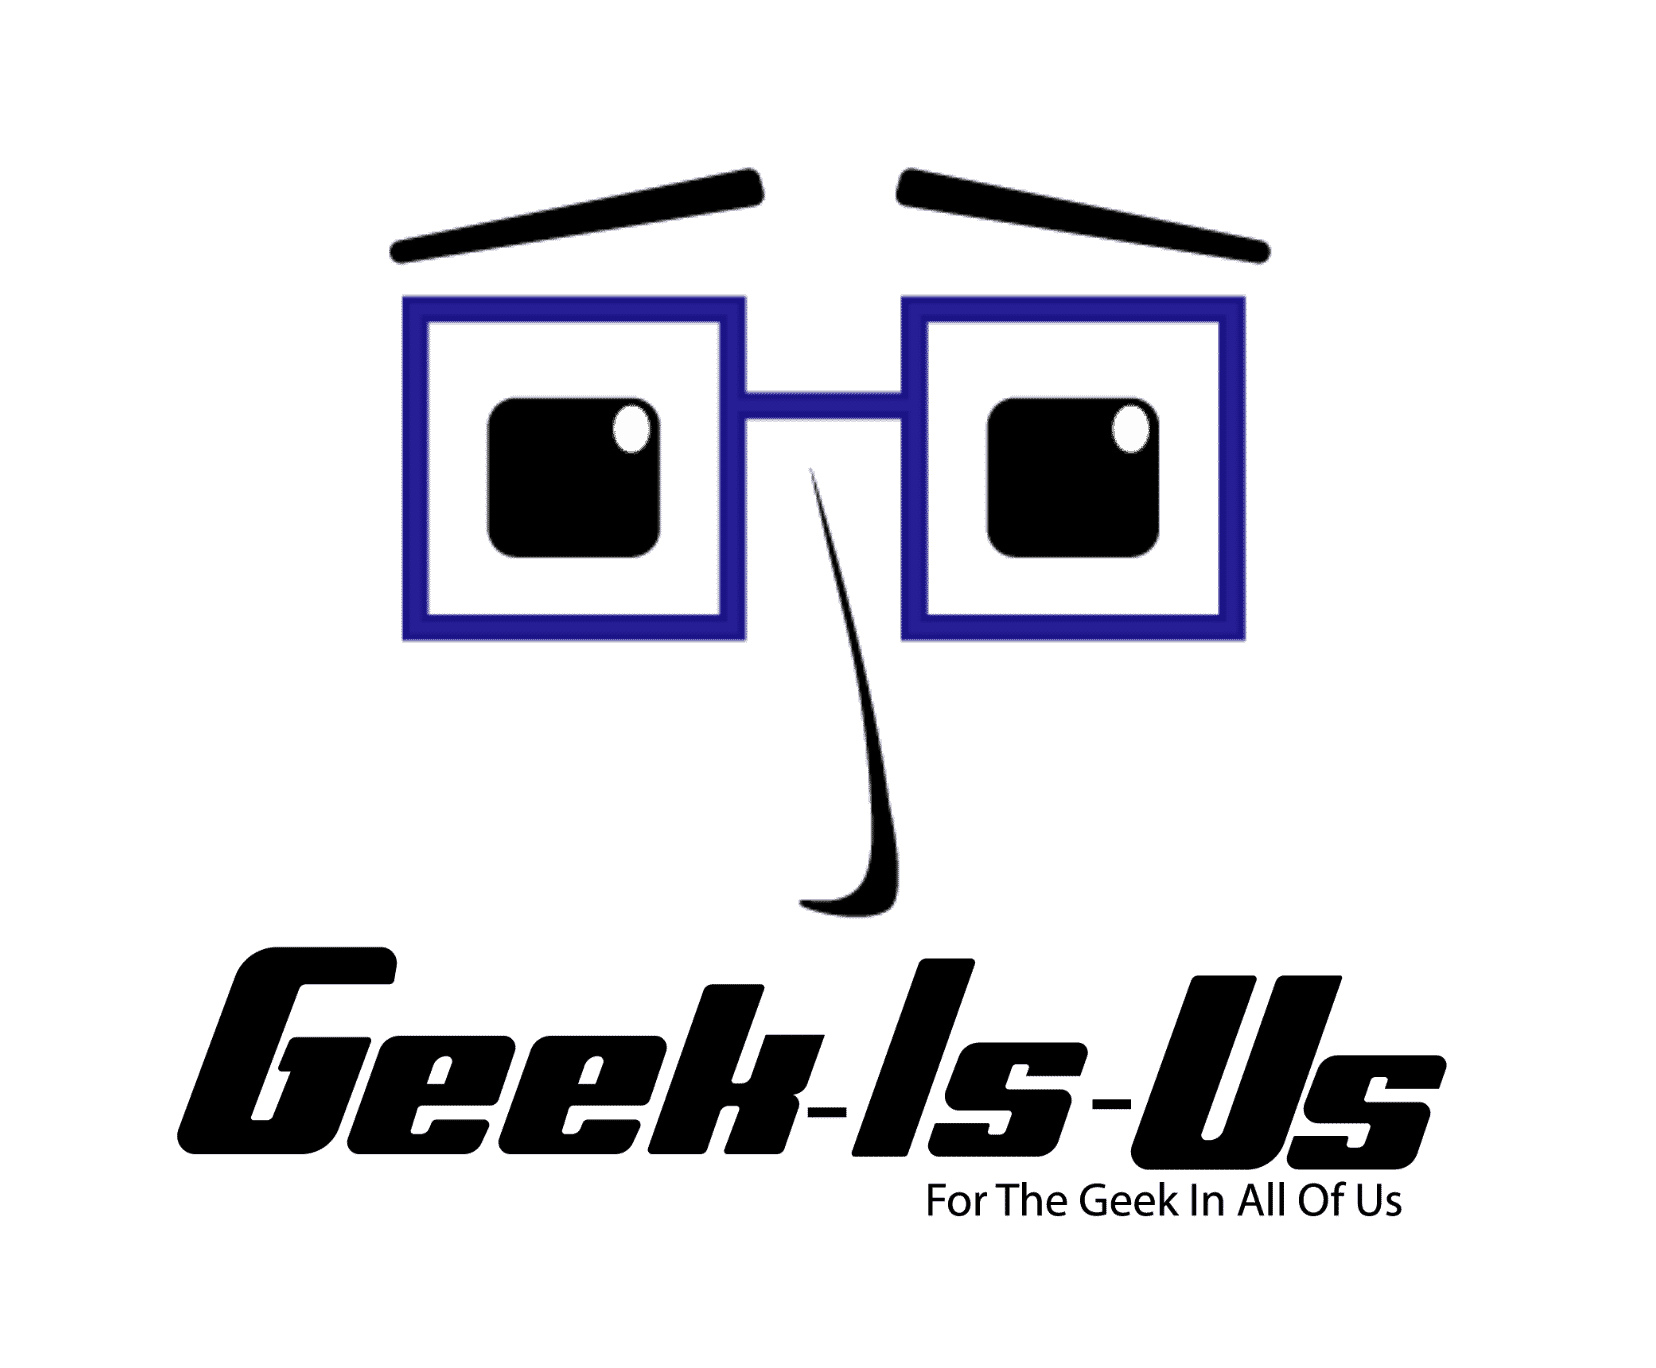 geekisus logo stacked